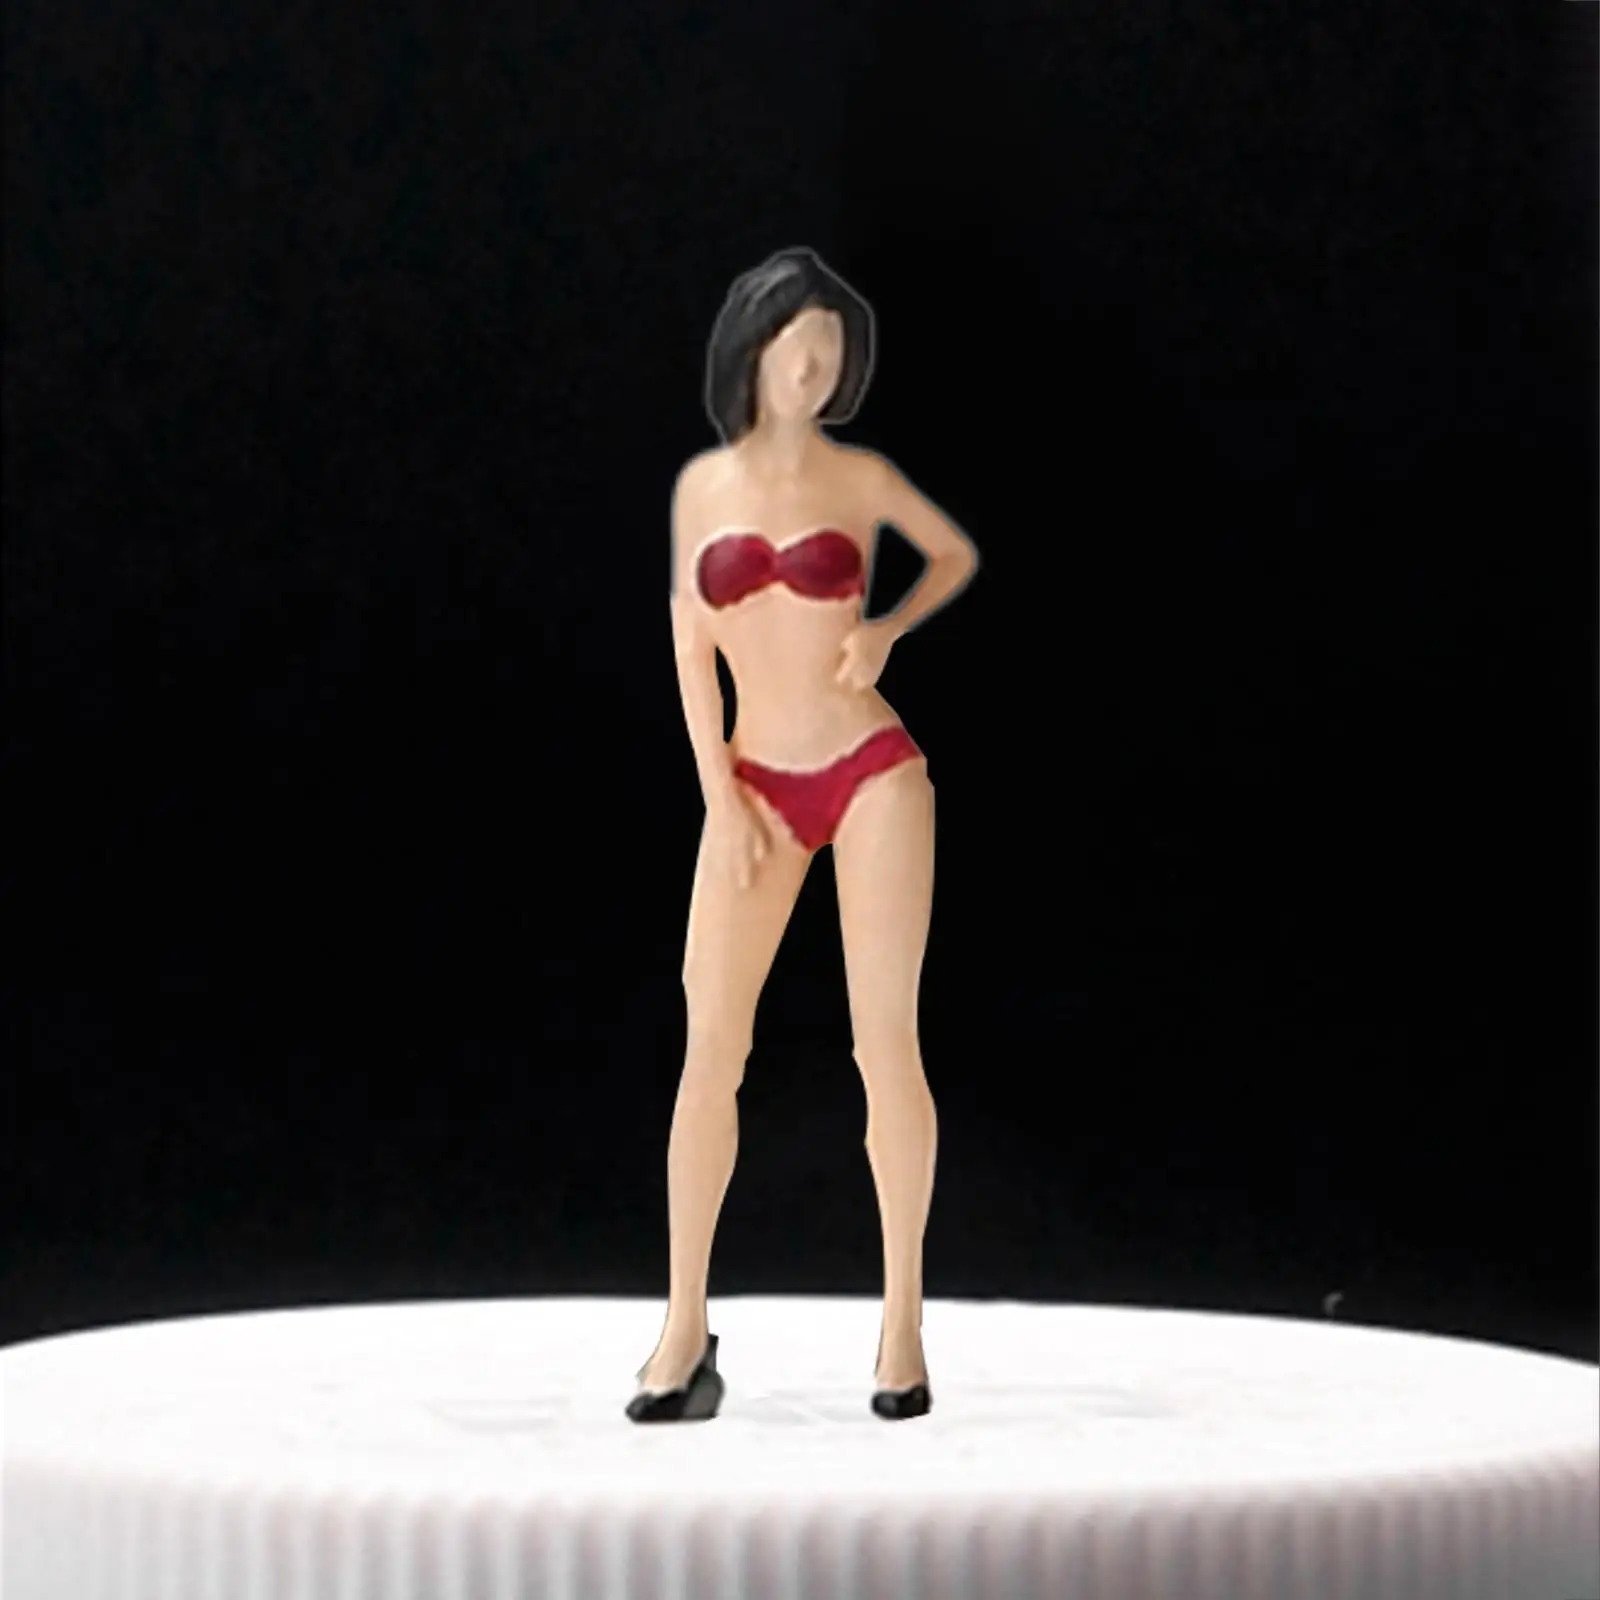 1/64 Female Models Figurine Simulation Figurines for Dollhouse Layout Decor